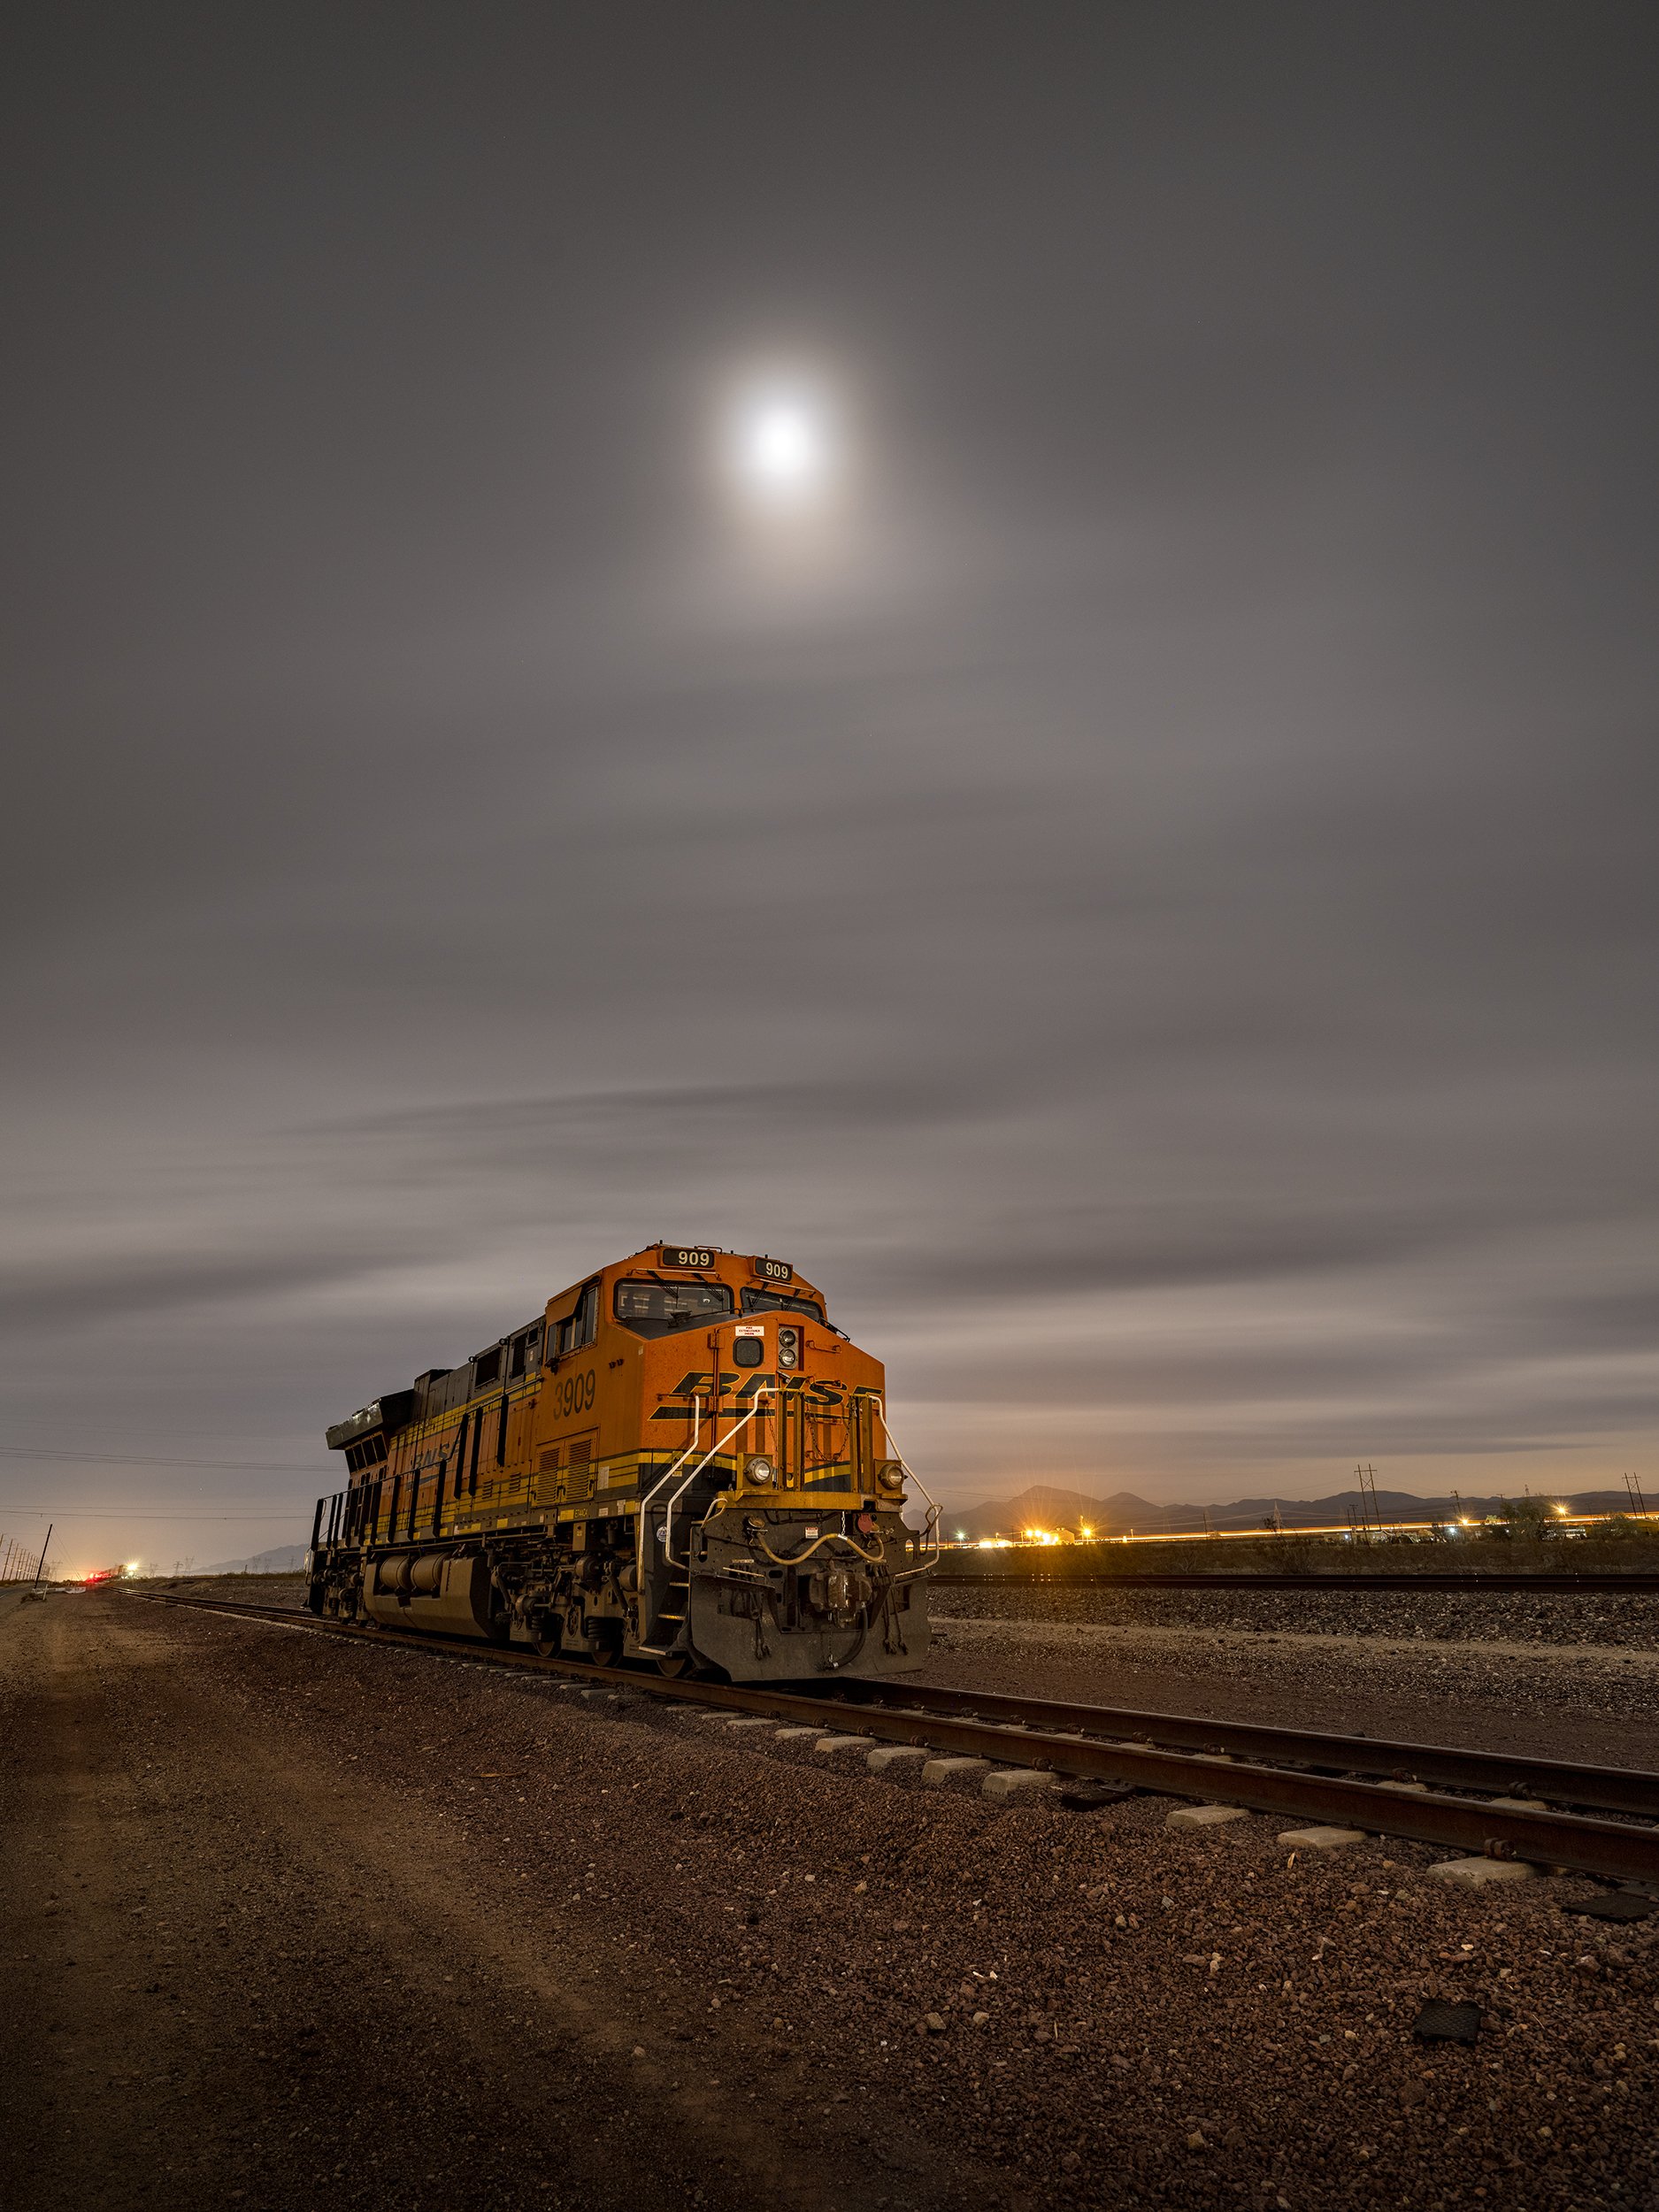  Locomotive #1. Daggett, California. December 13, 2021 